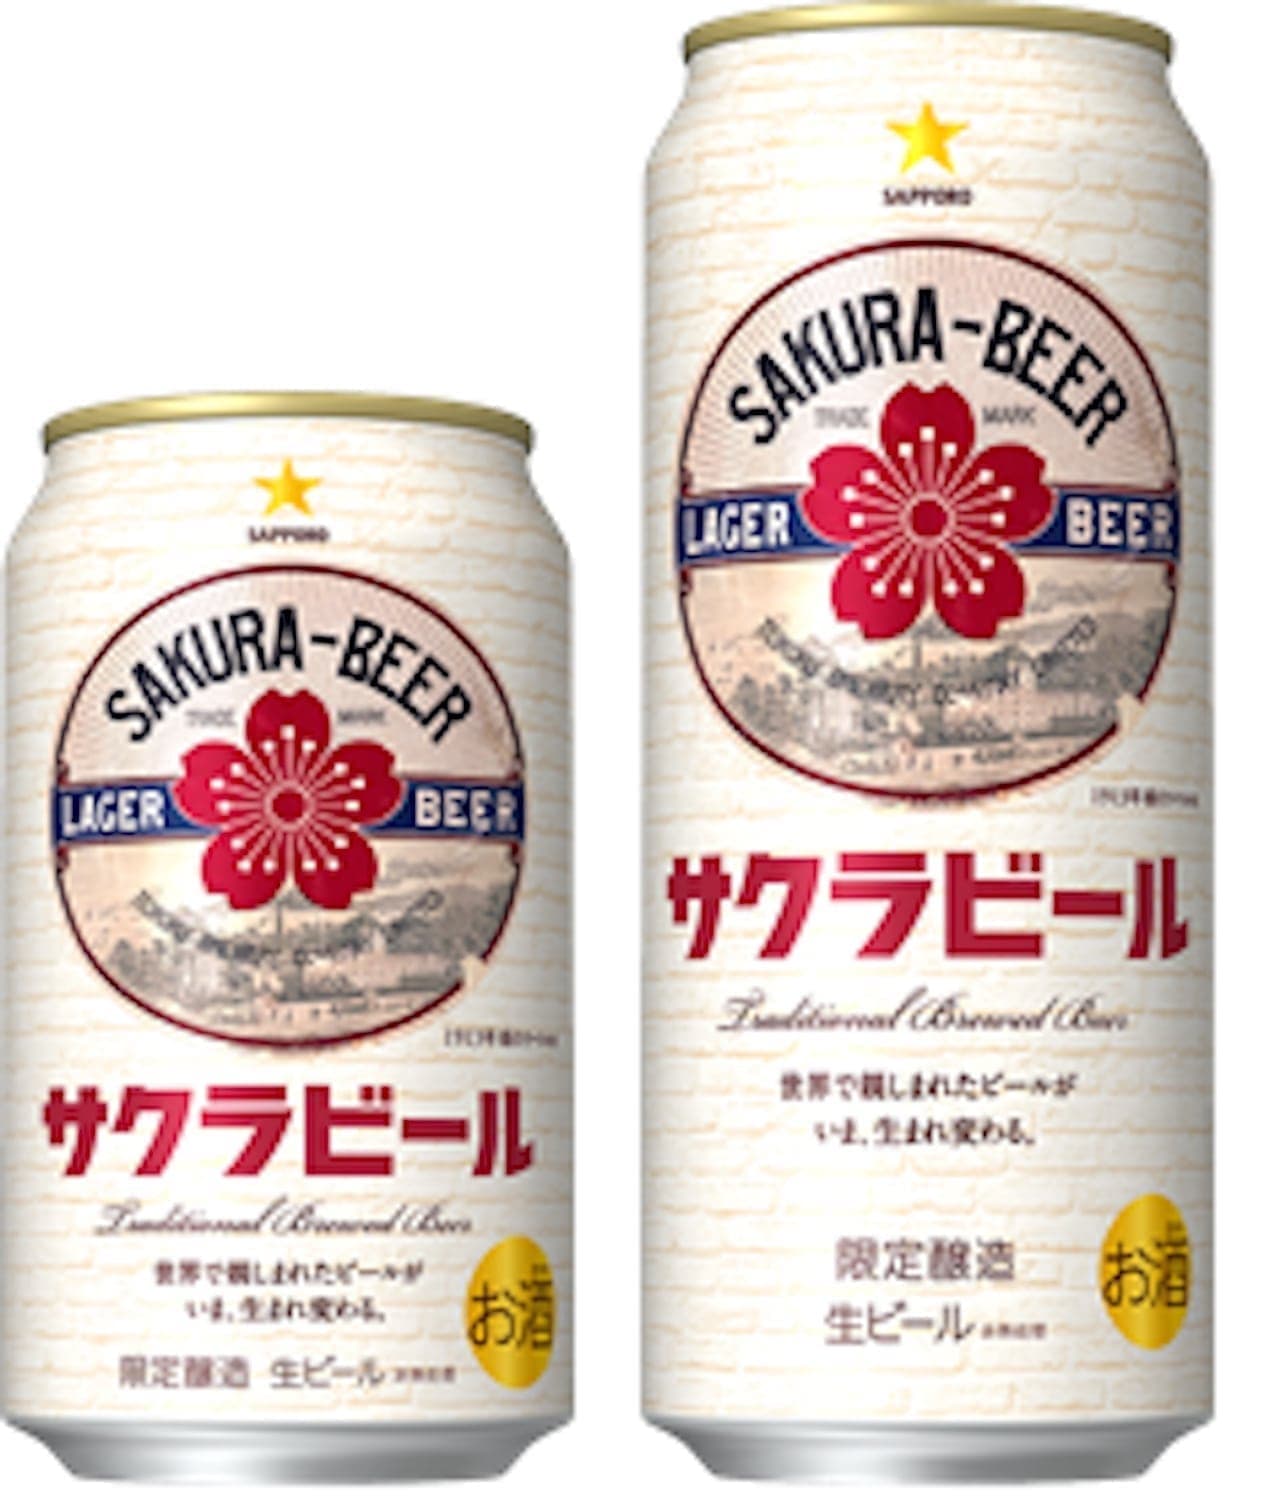 Limited quantity "Sapporo Sakura Beer"